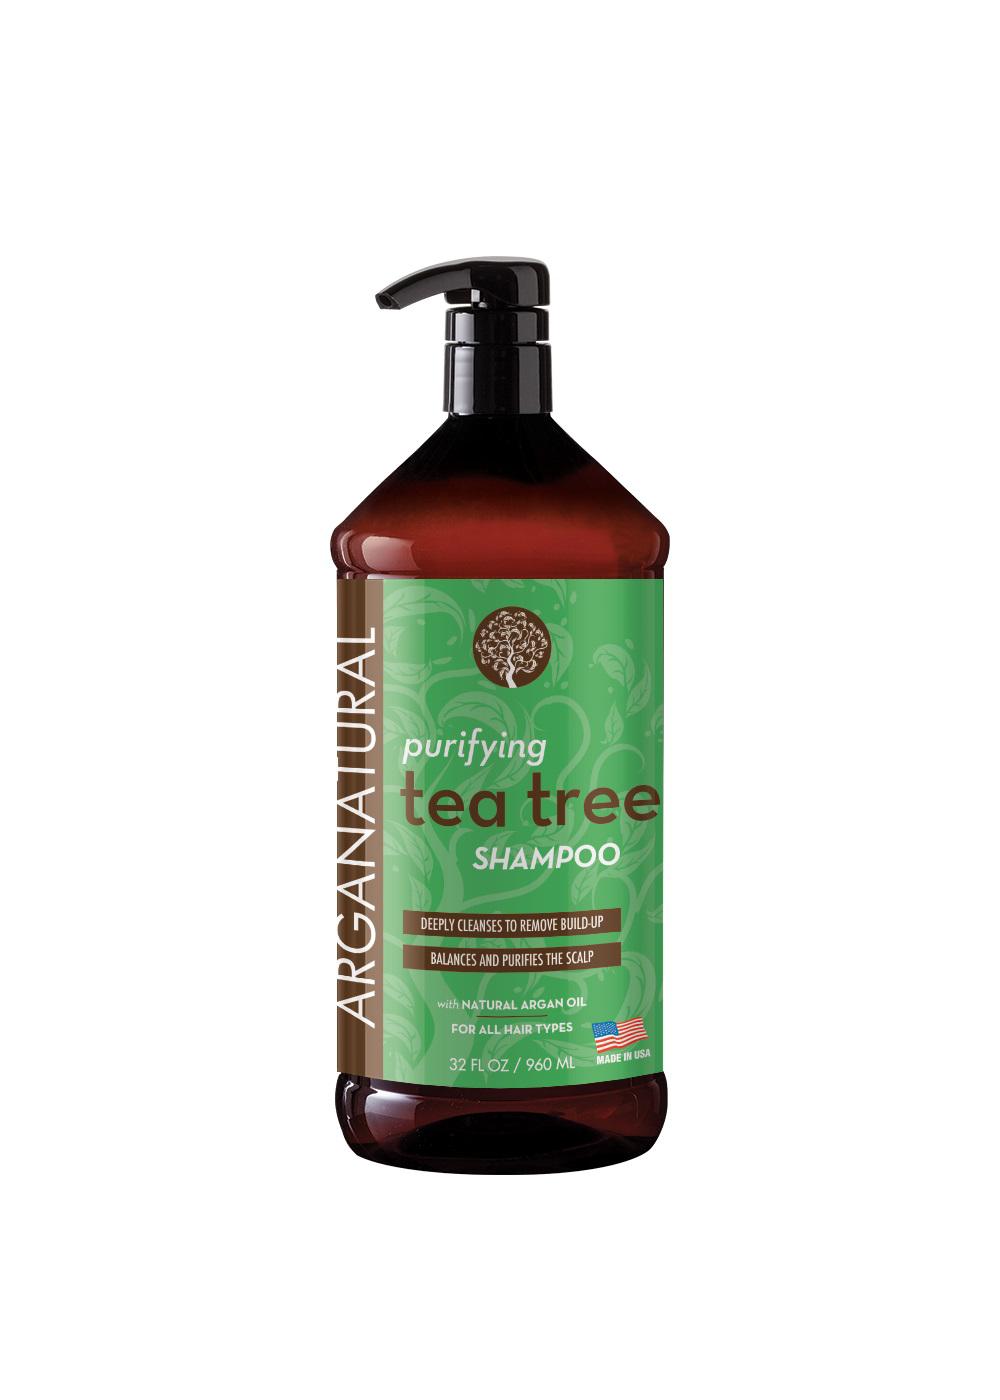 Arganatural Scalp Health Tea Tree Shampoo; image 1 of 2